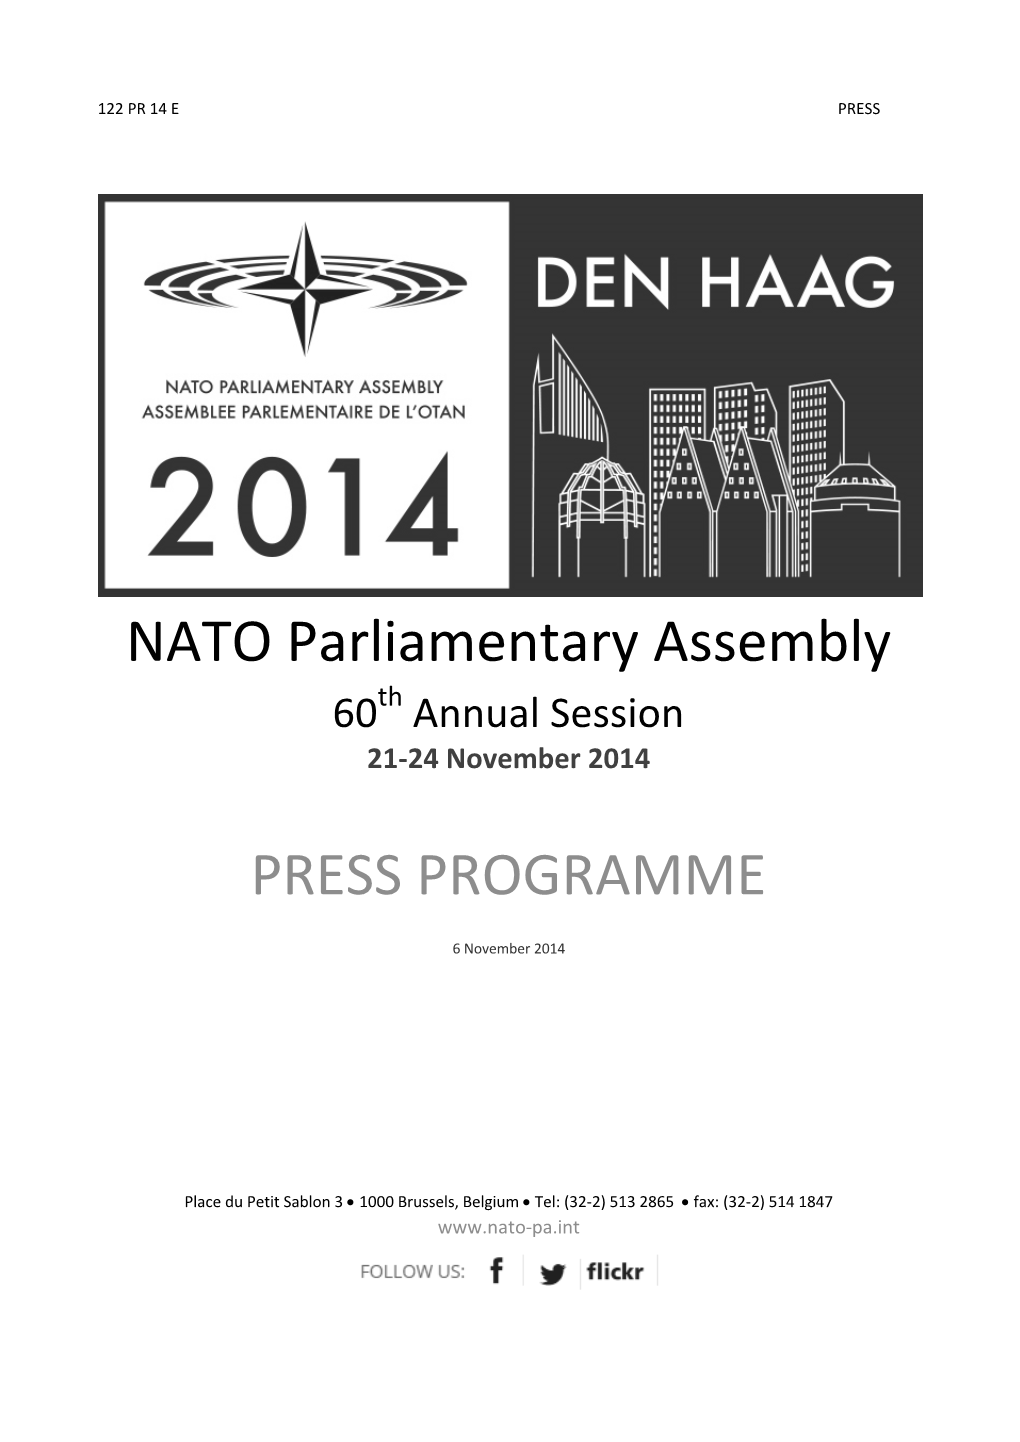 NATO Parliamentary Assembly PRESS PROGRAMME